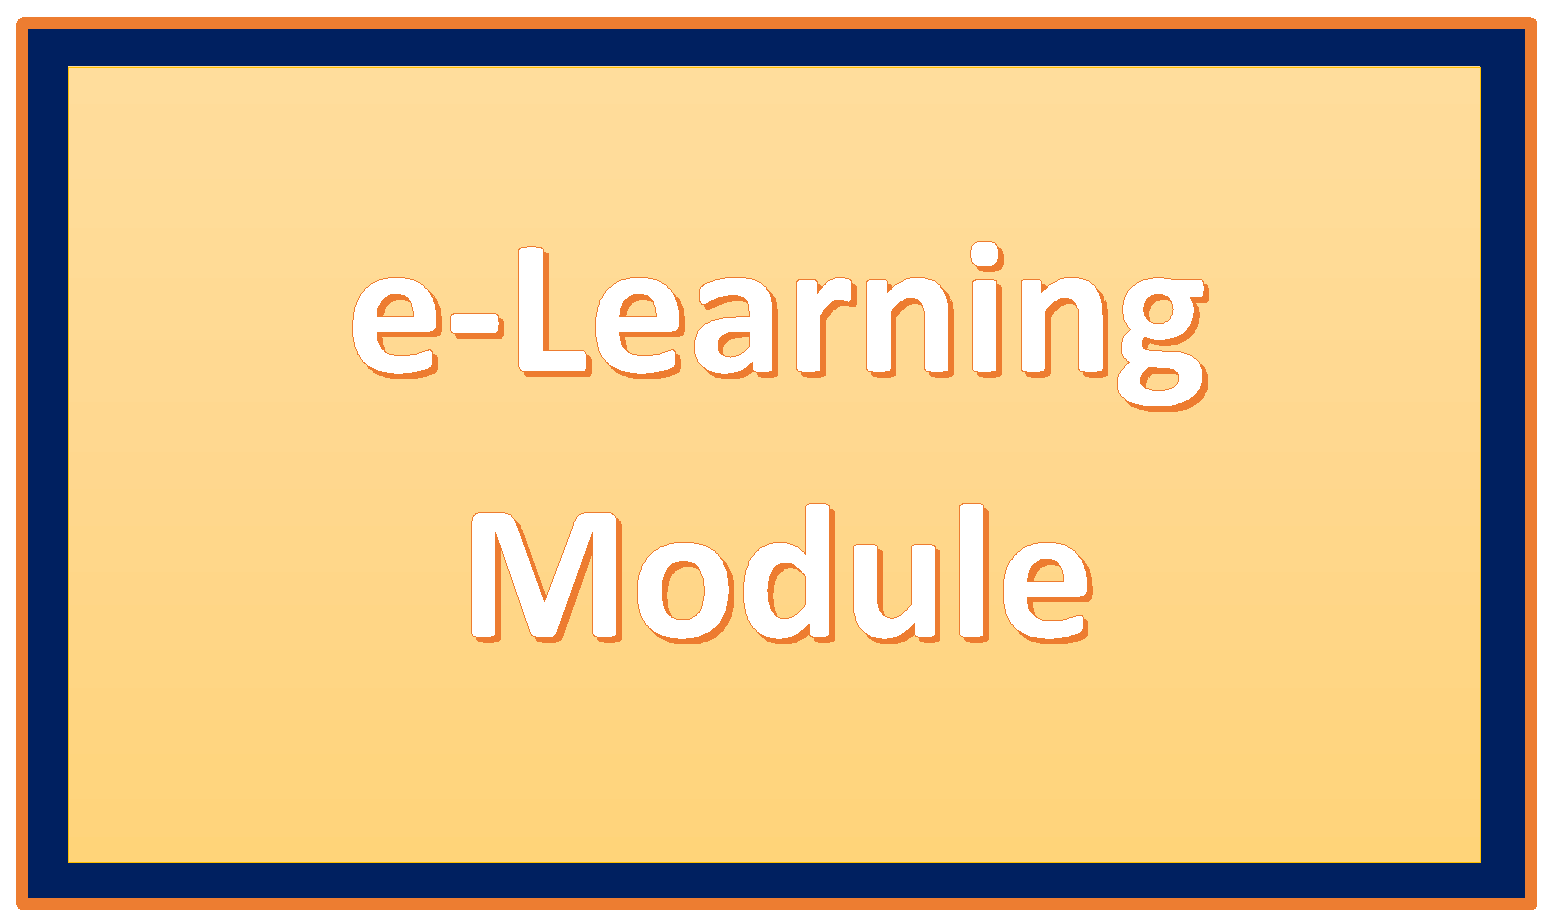 http://study.aisectonline.com/images/Distributor Salesman Course Module .png